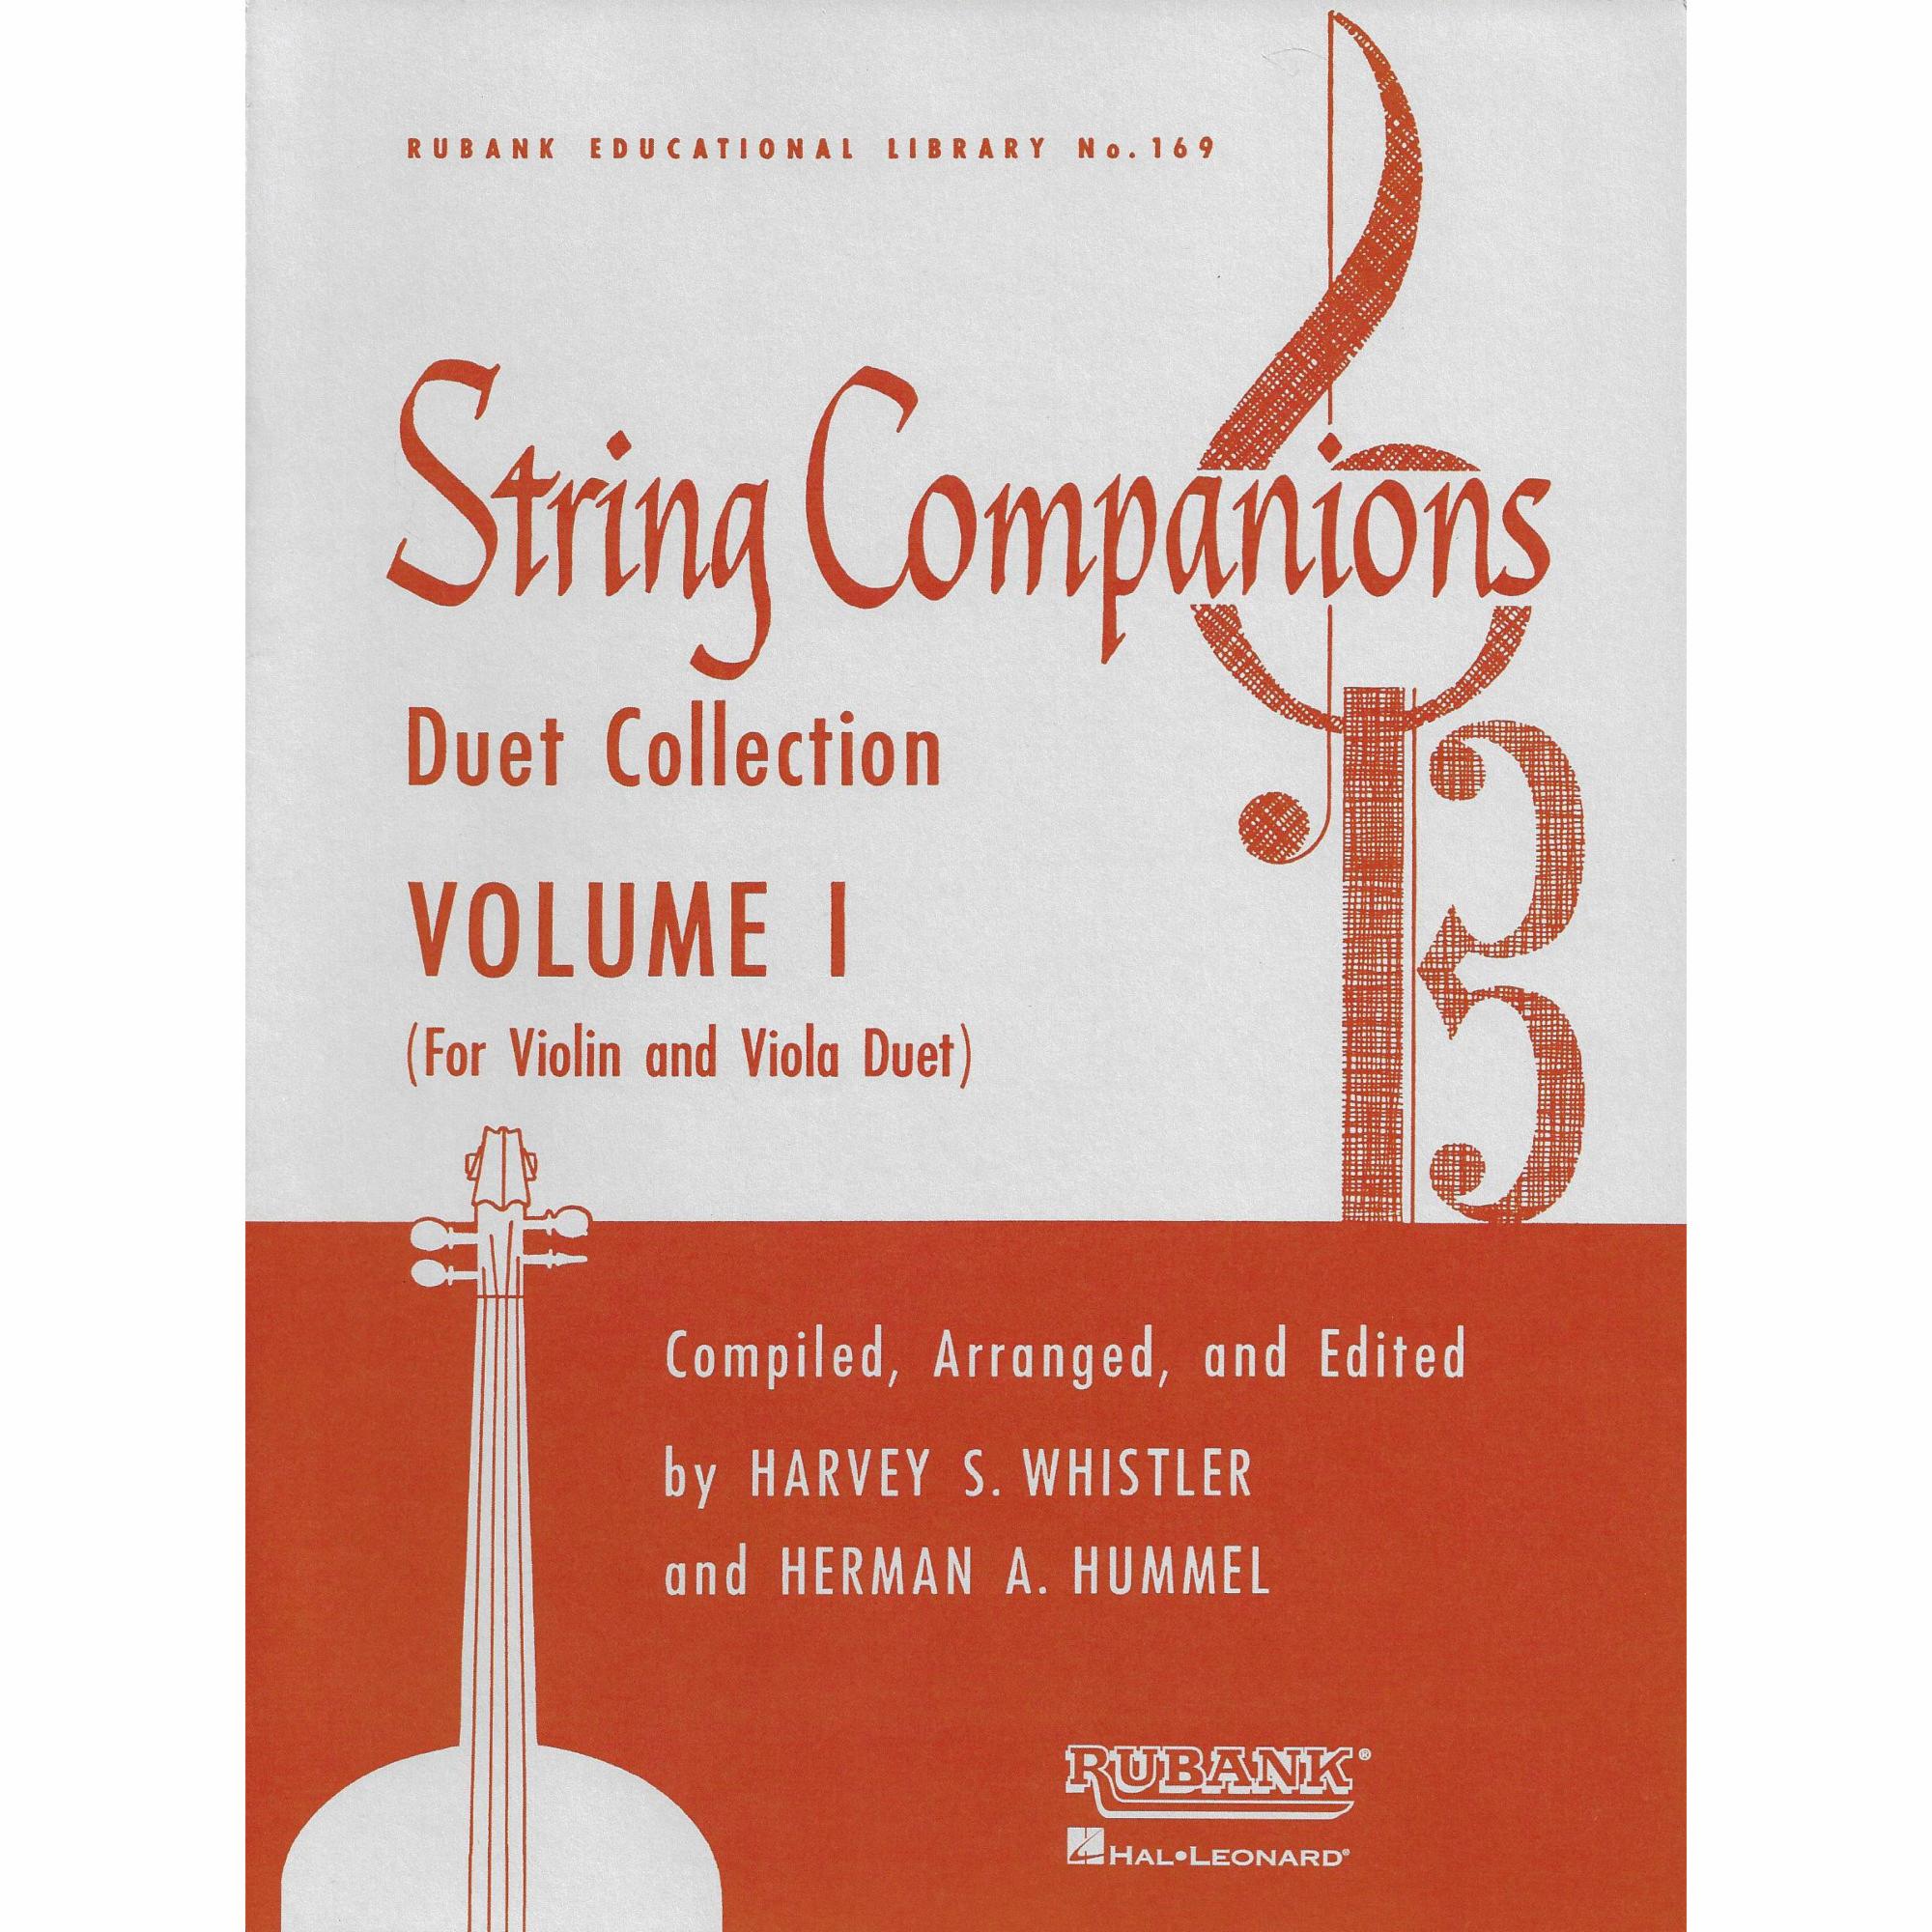 String Companions, Vols. 1-2 for Violin and Viola